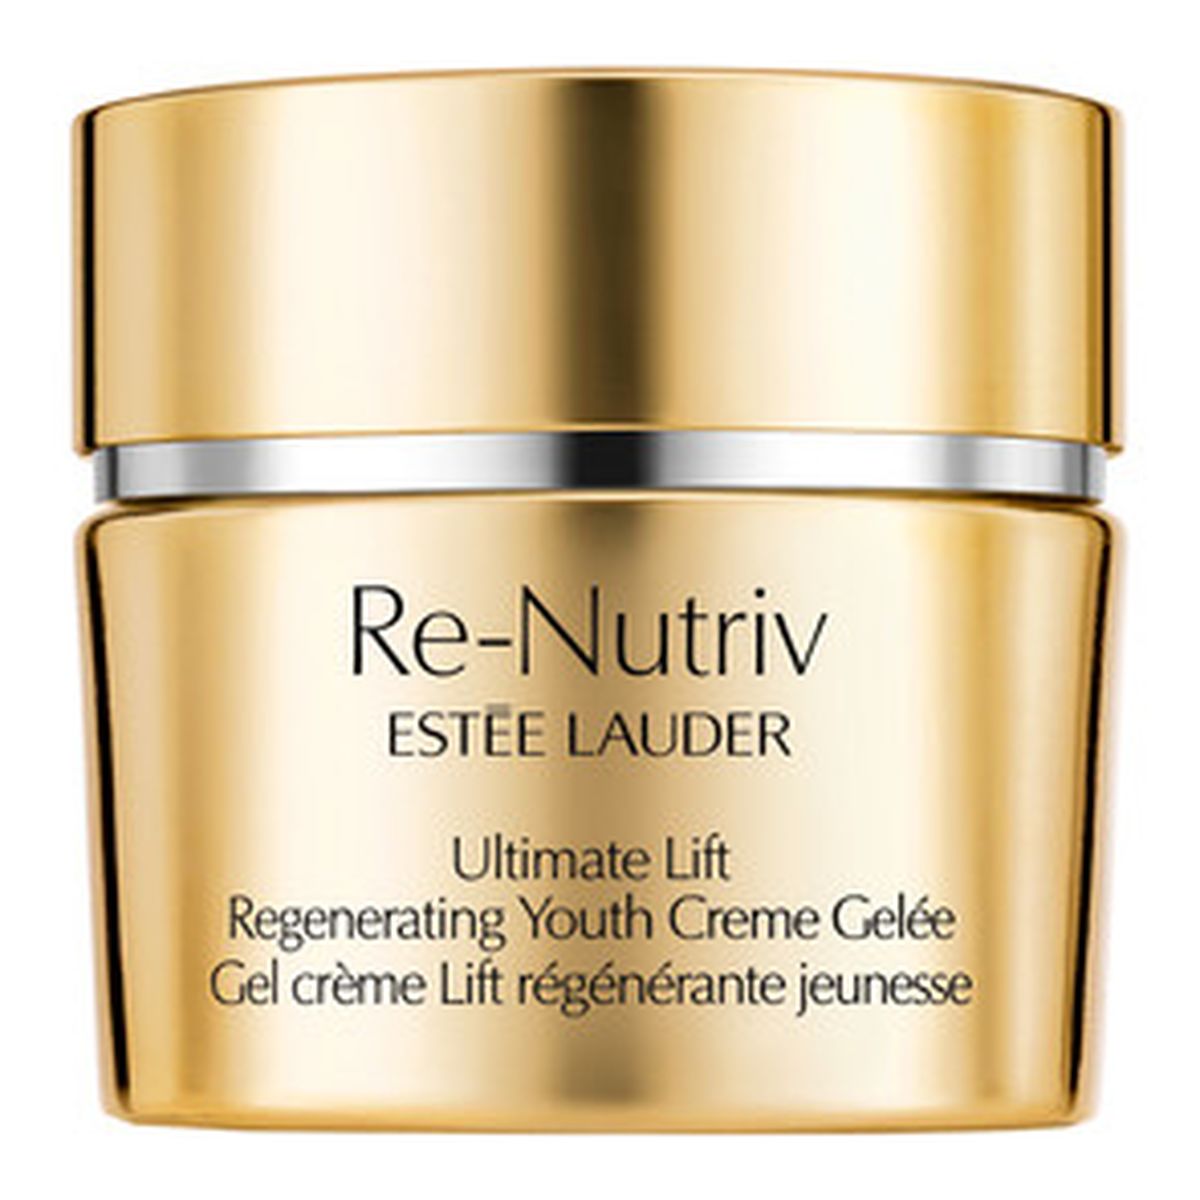 Estee Lauder Re-Nutriv Ultimate Lift Regenerating Youth Creme Gelee Luksusowy krem-żel regenerujący 50ml